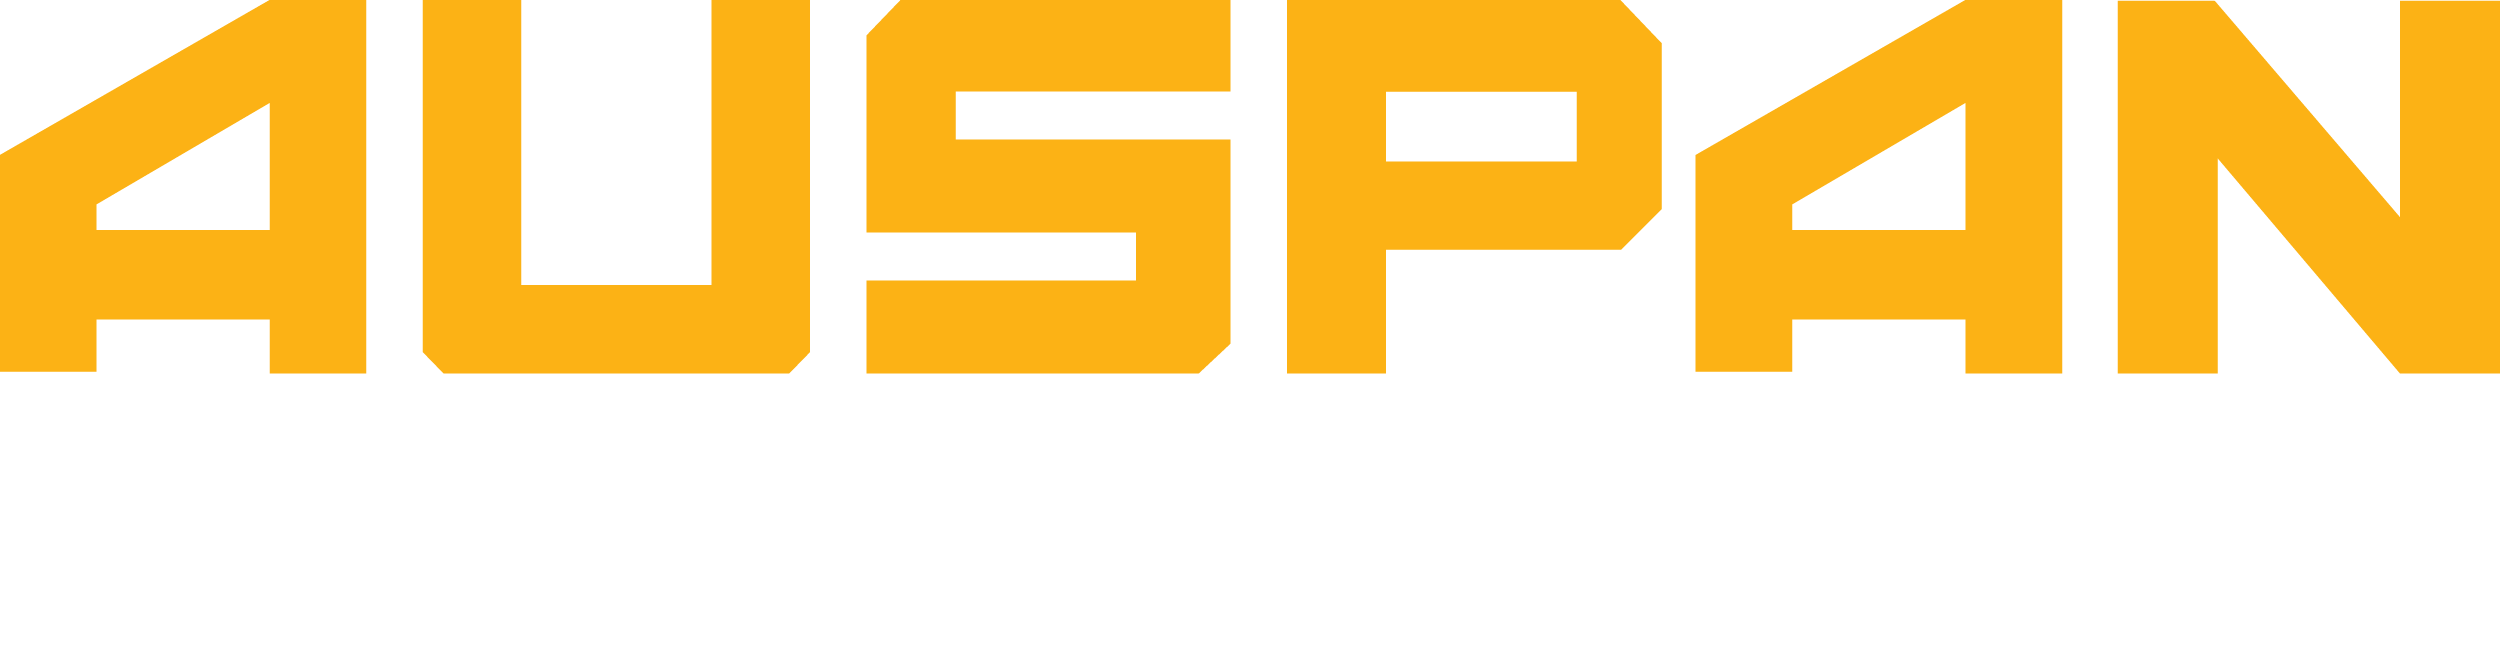 auspan-commercial-full-color-reverse-horizontal-lockup-logo